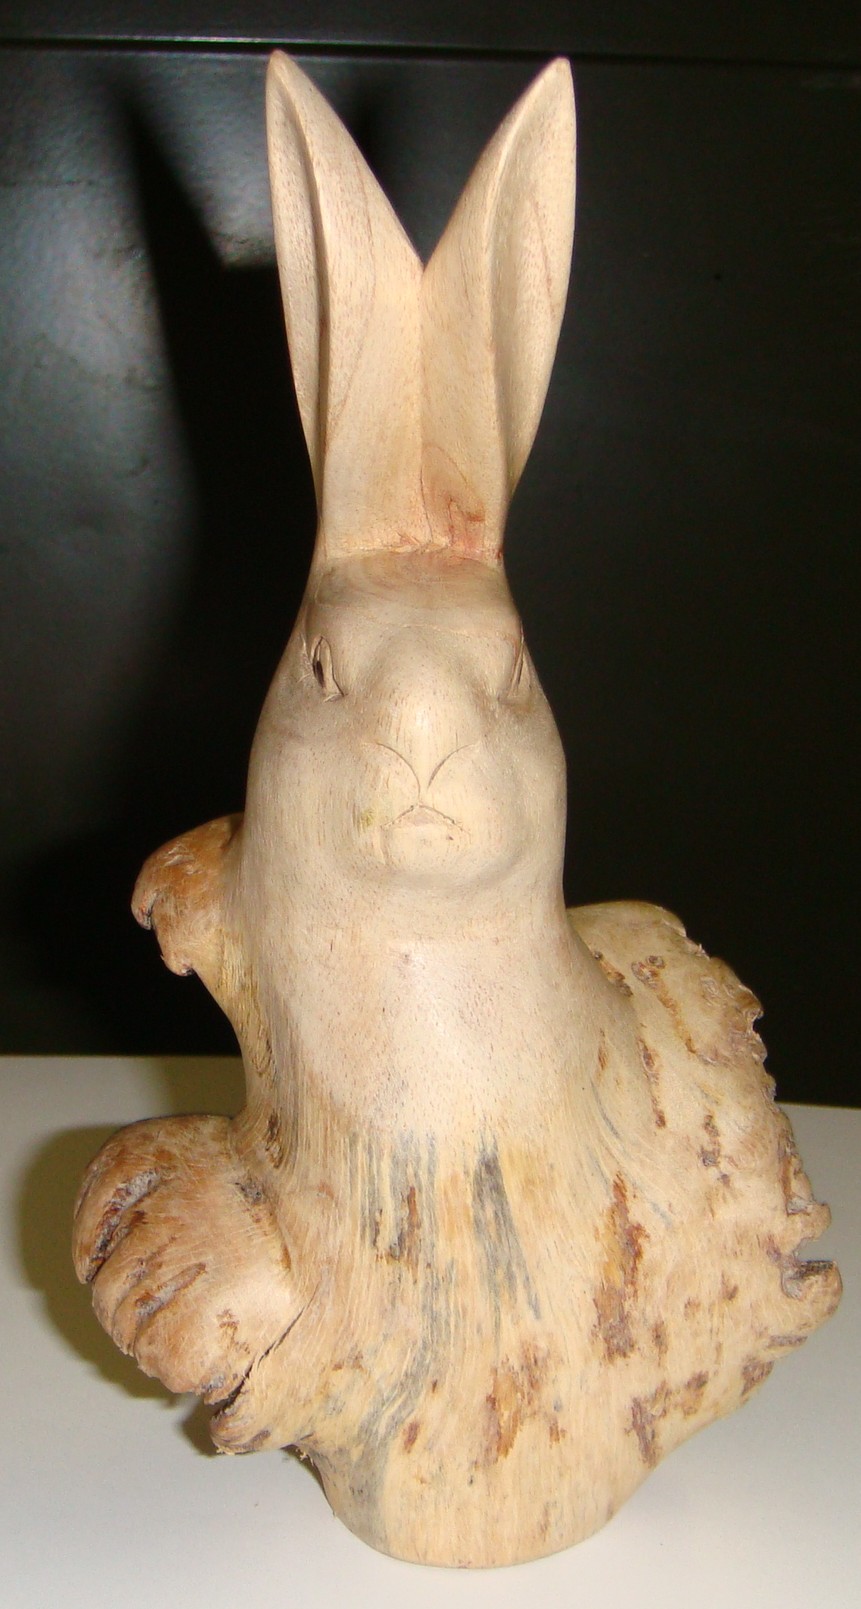 Wood Carved Rabbit